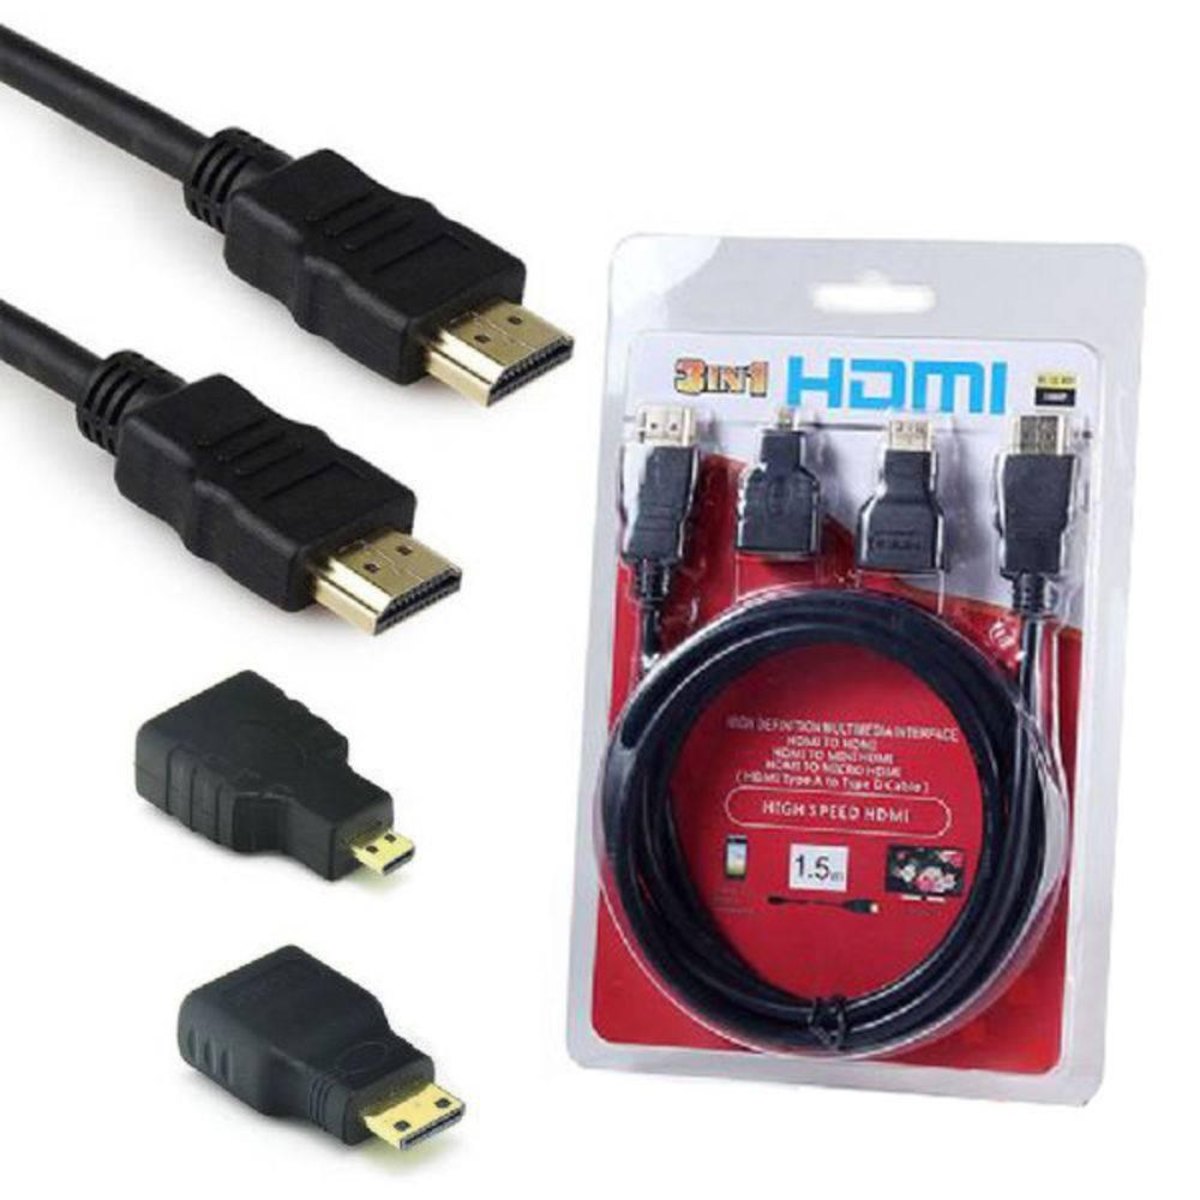 Micro HDMI to HDMI adapter